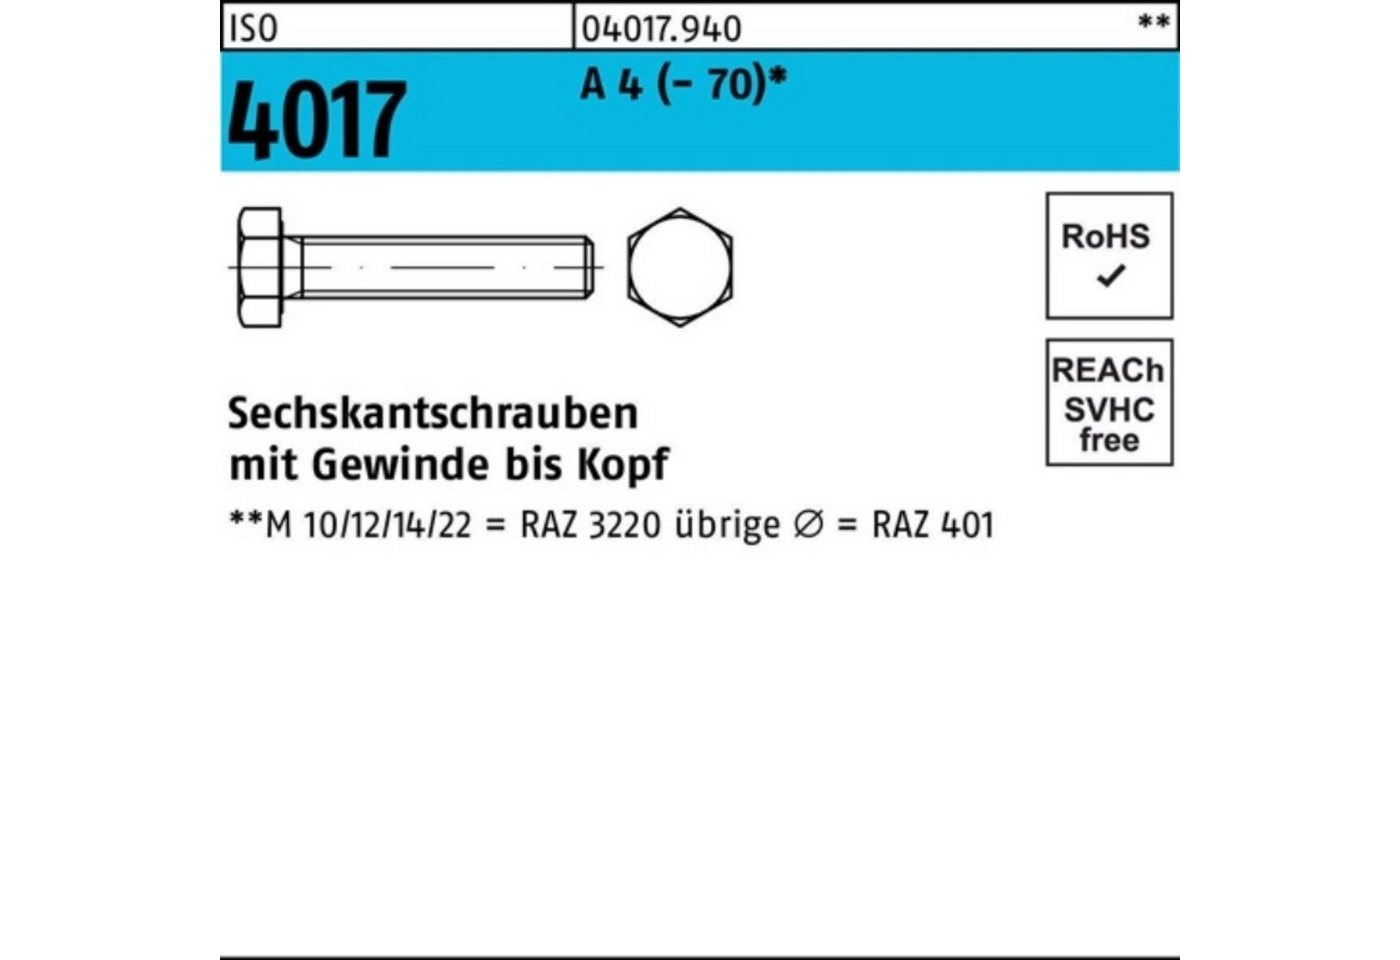 Bufab Sechskantschraube 100er Pack Sechskantschraube ISO 4017 VG M8x 170 A 4 (70) 1 Stück I von Bufab